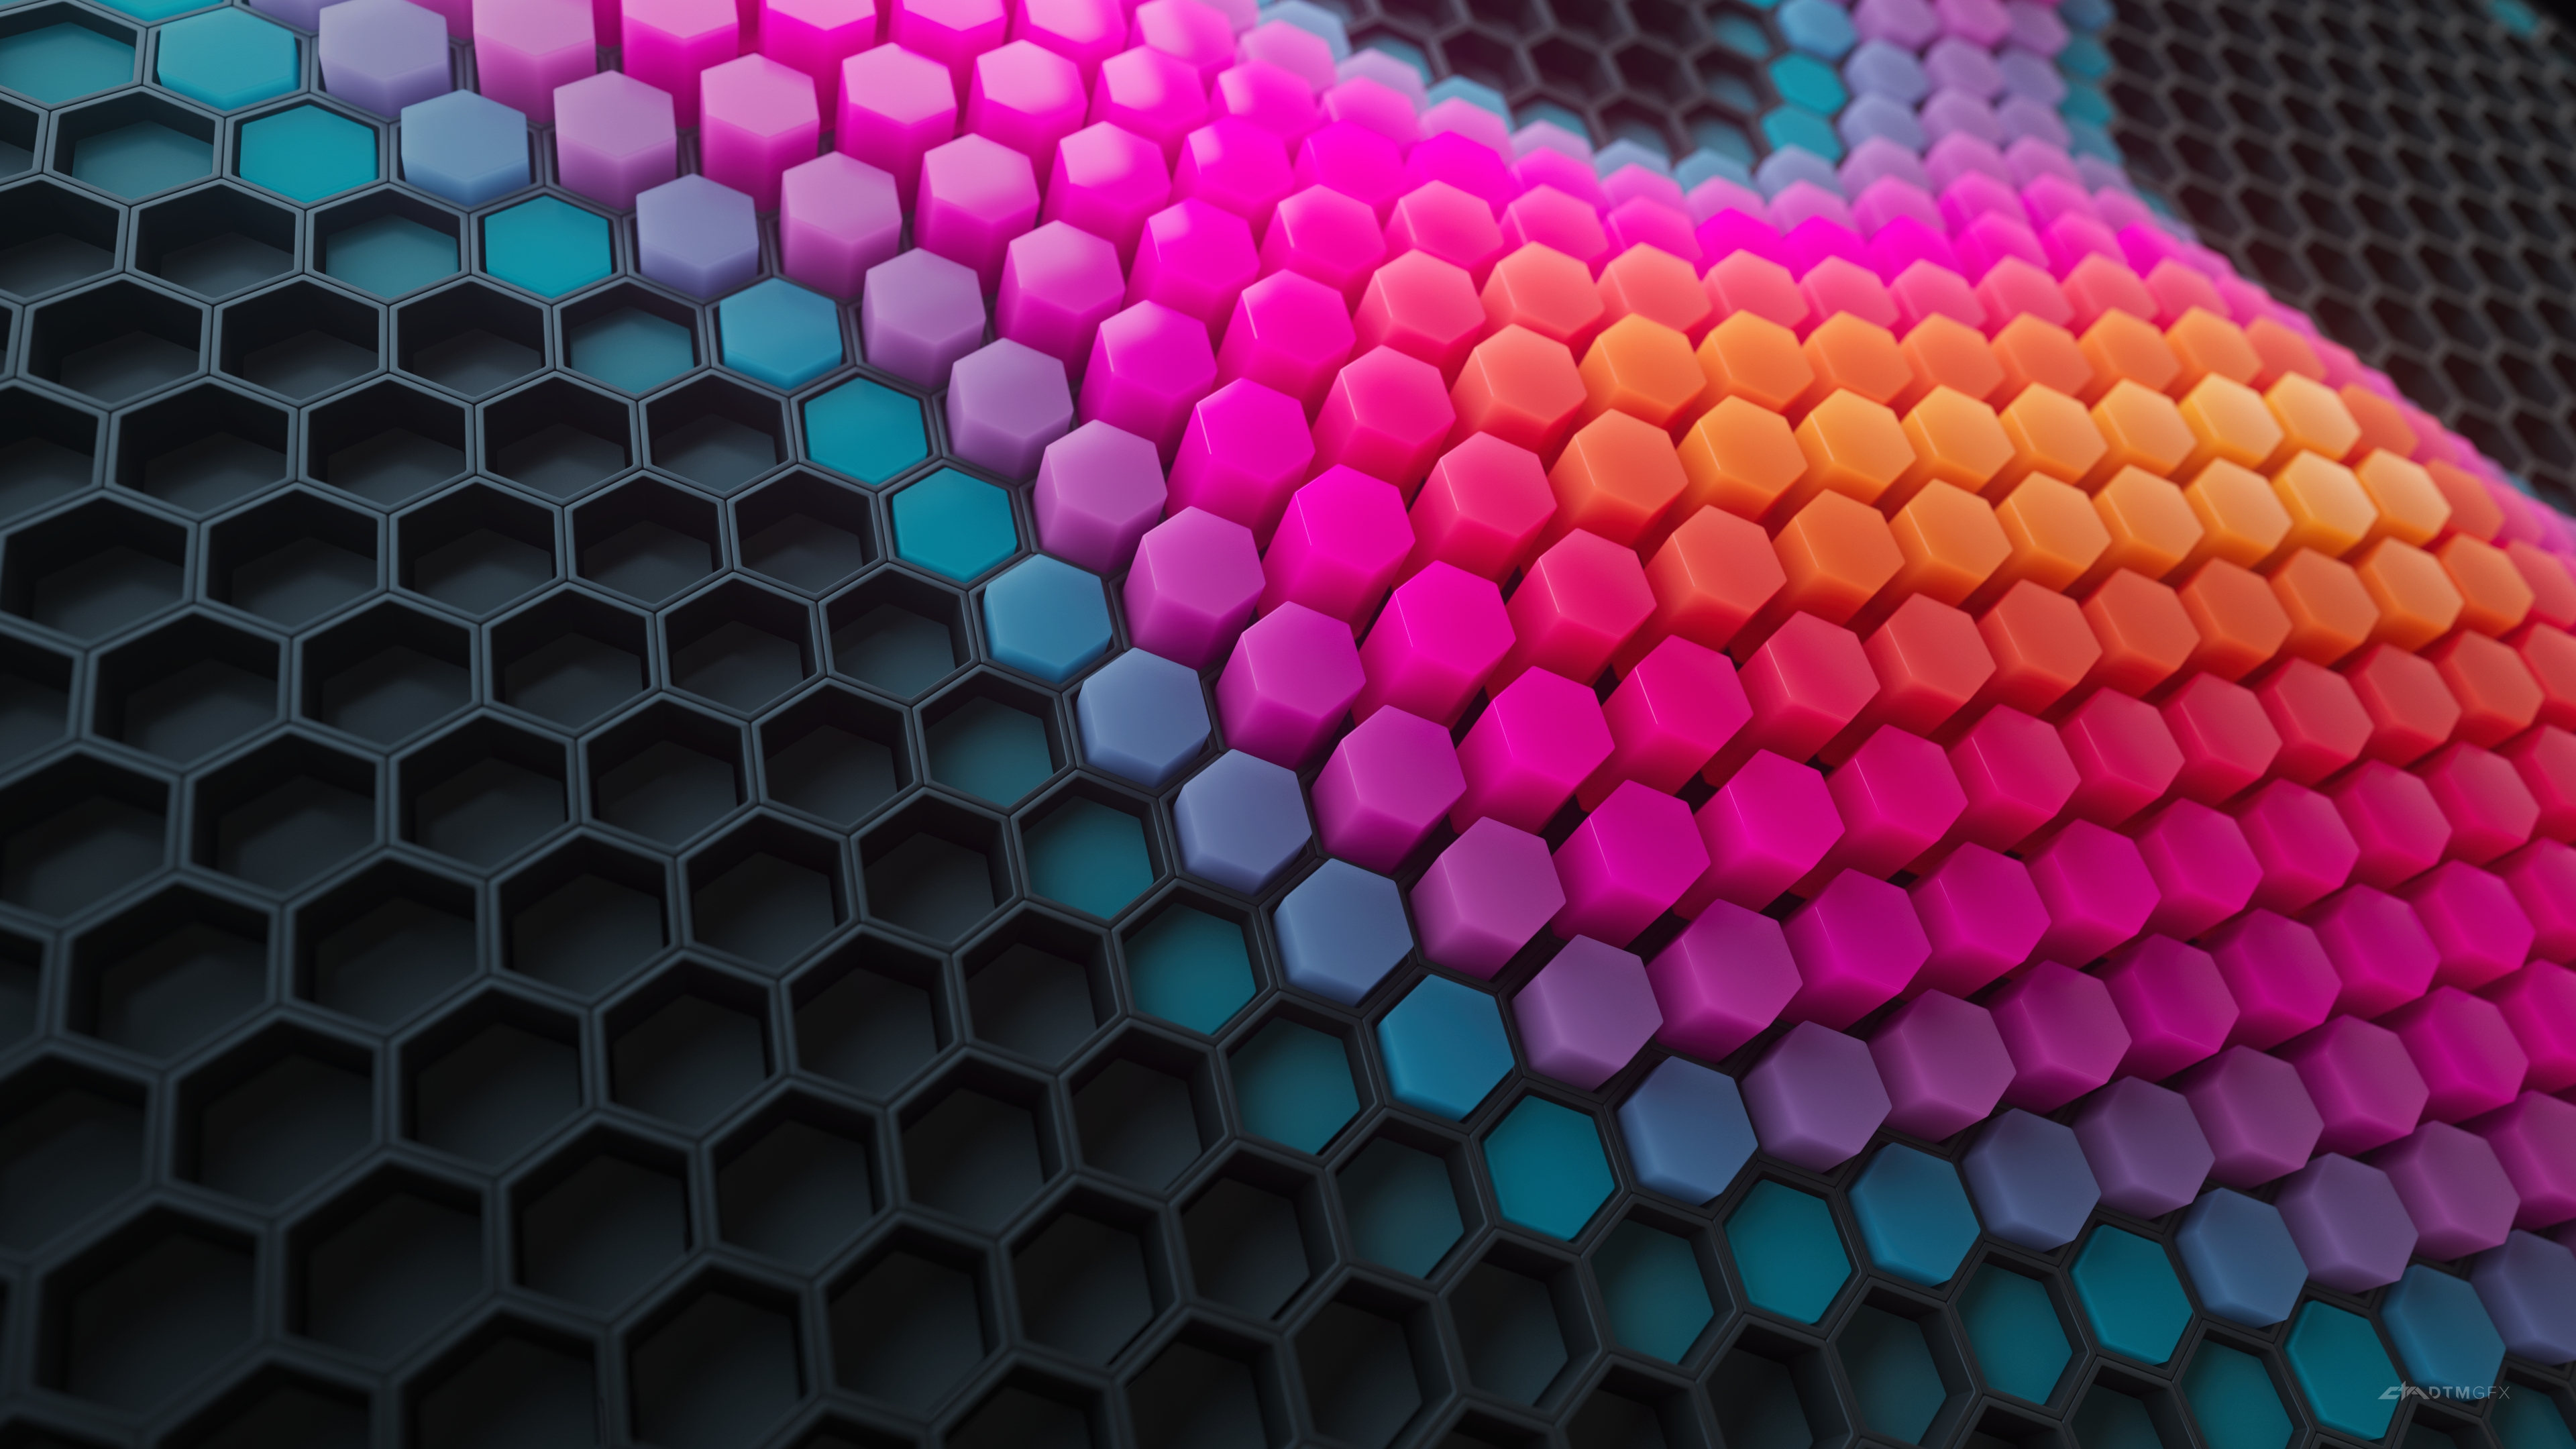 HD wallpaper, 3D Background, Black Blocks, Hexagons, Colorful Blocks, Colorful Background, Geometric, Patterns